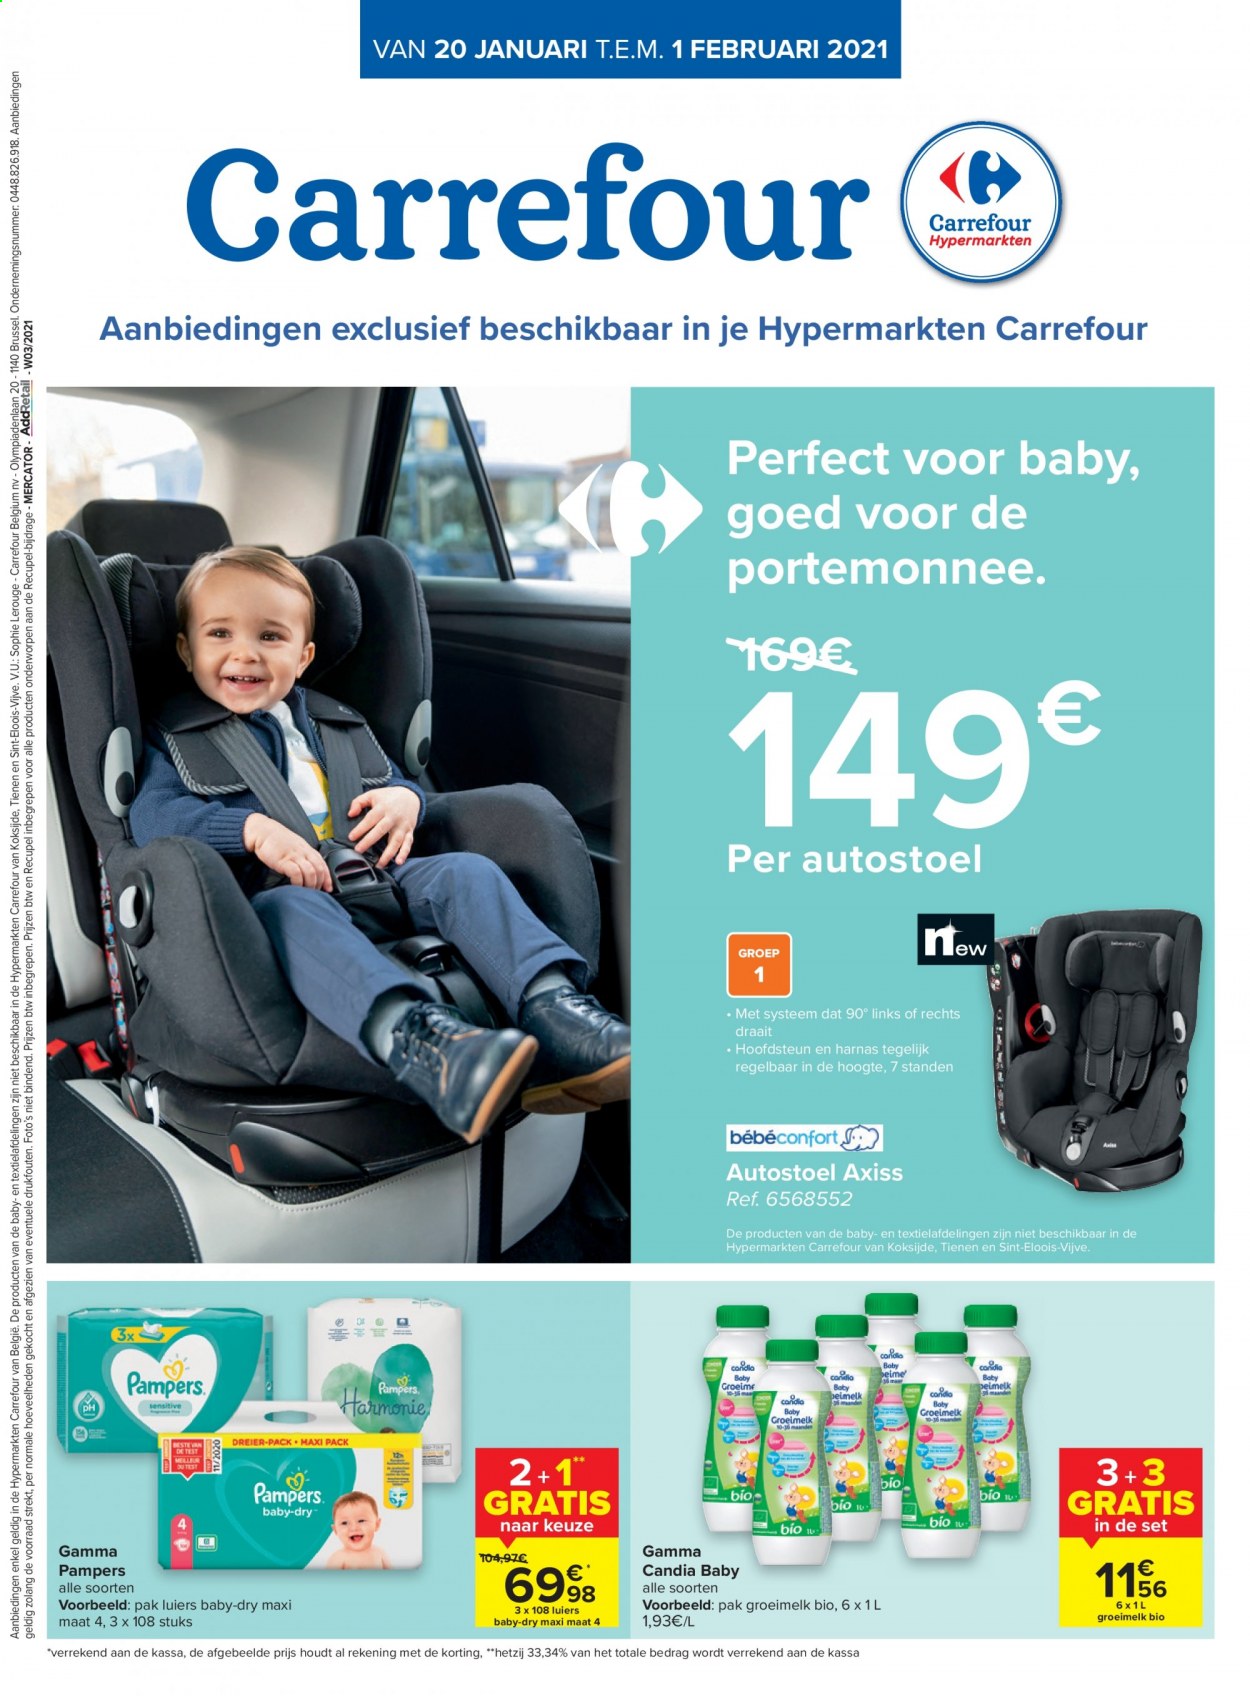 thumbnail - Carrefour hypermarkt-aanbieding - 20/01/2021 - 01/02/2021 -  producten in de aanbieding - portemonnee, luiers, Pampers, Gamma. Pagina 1.